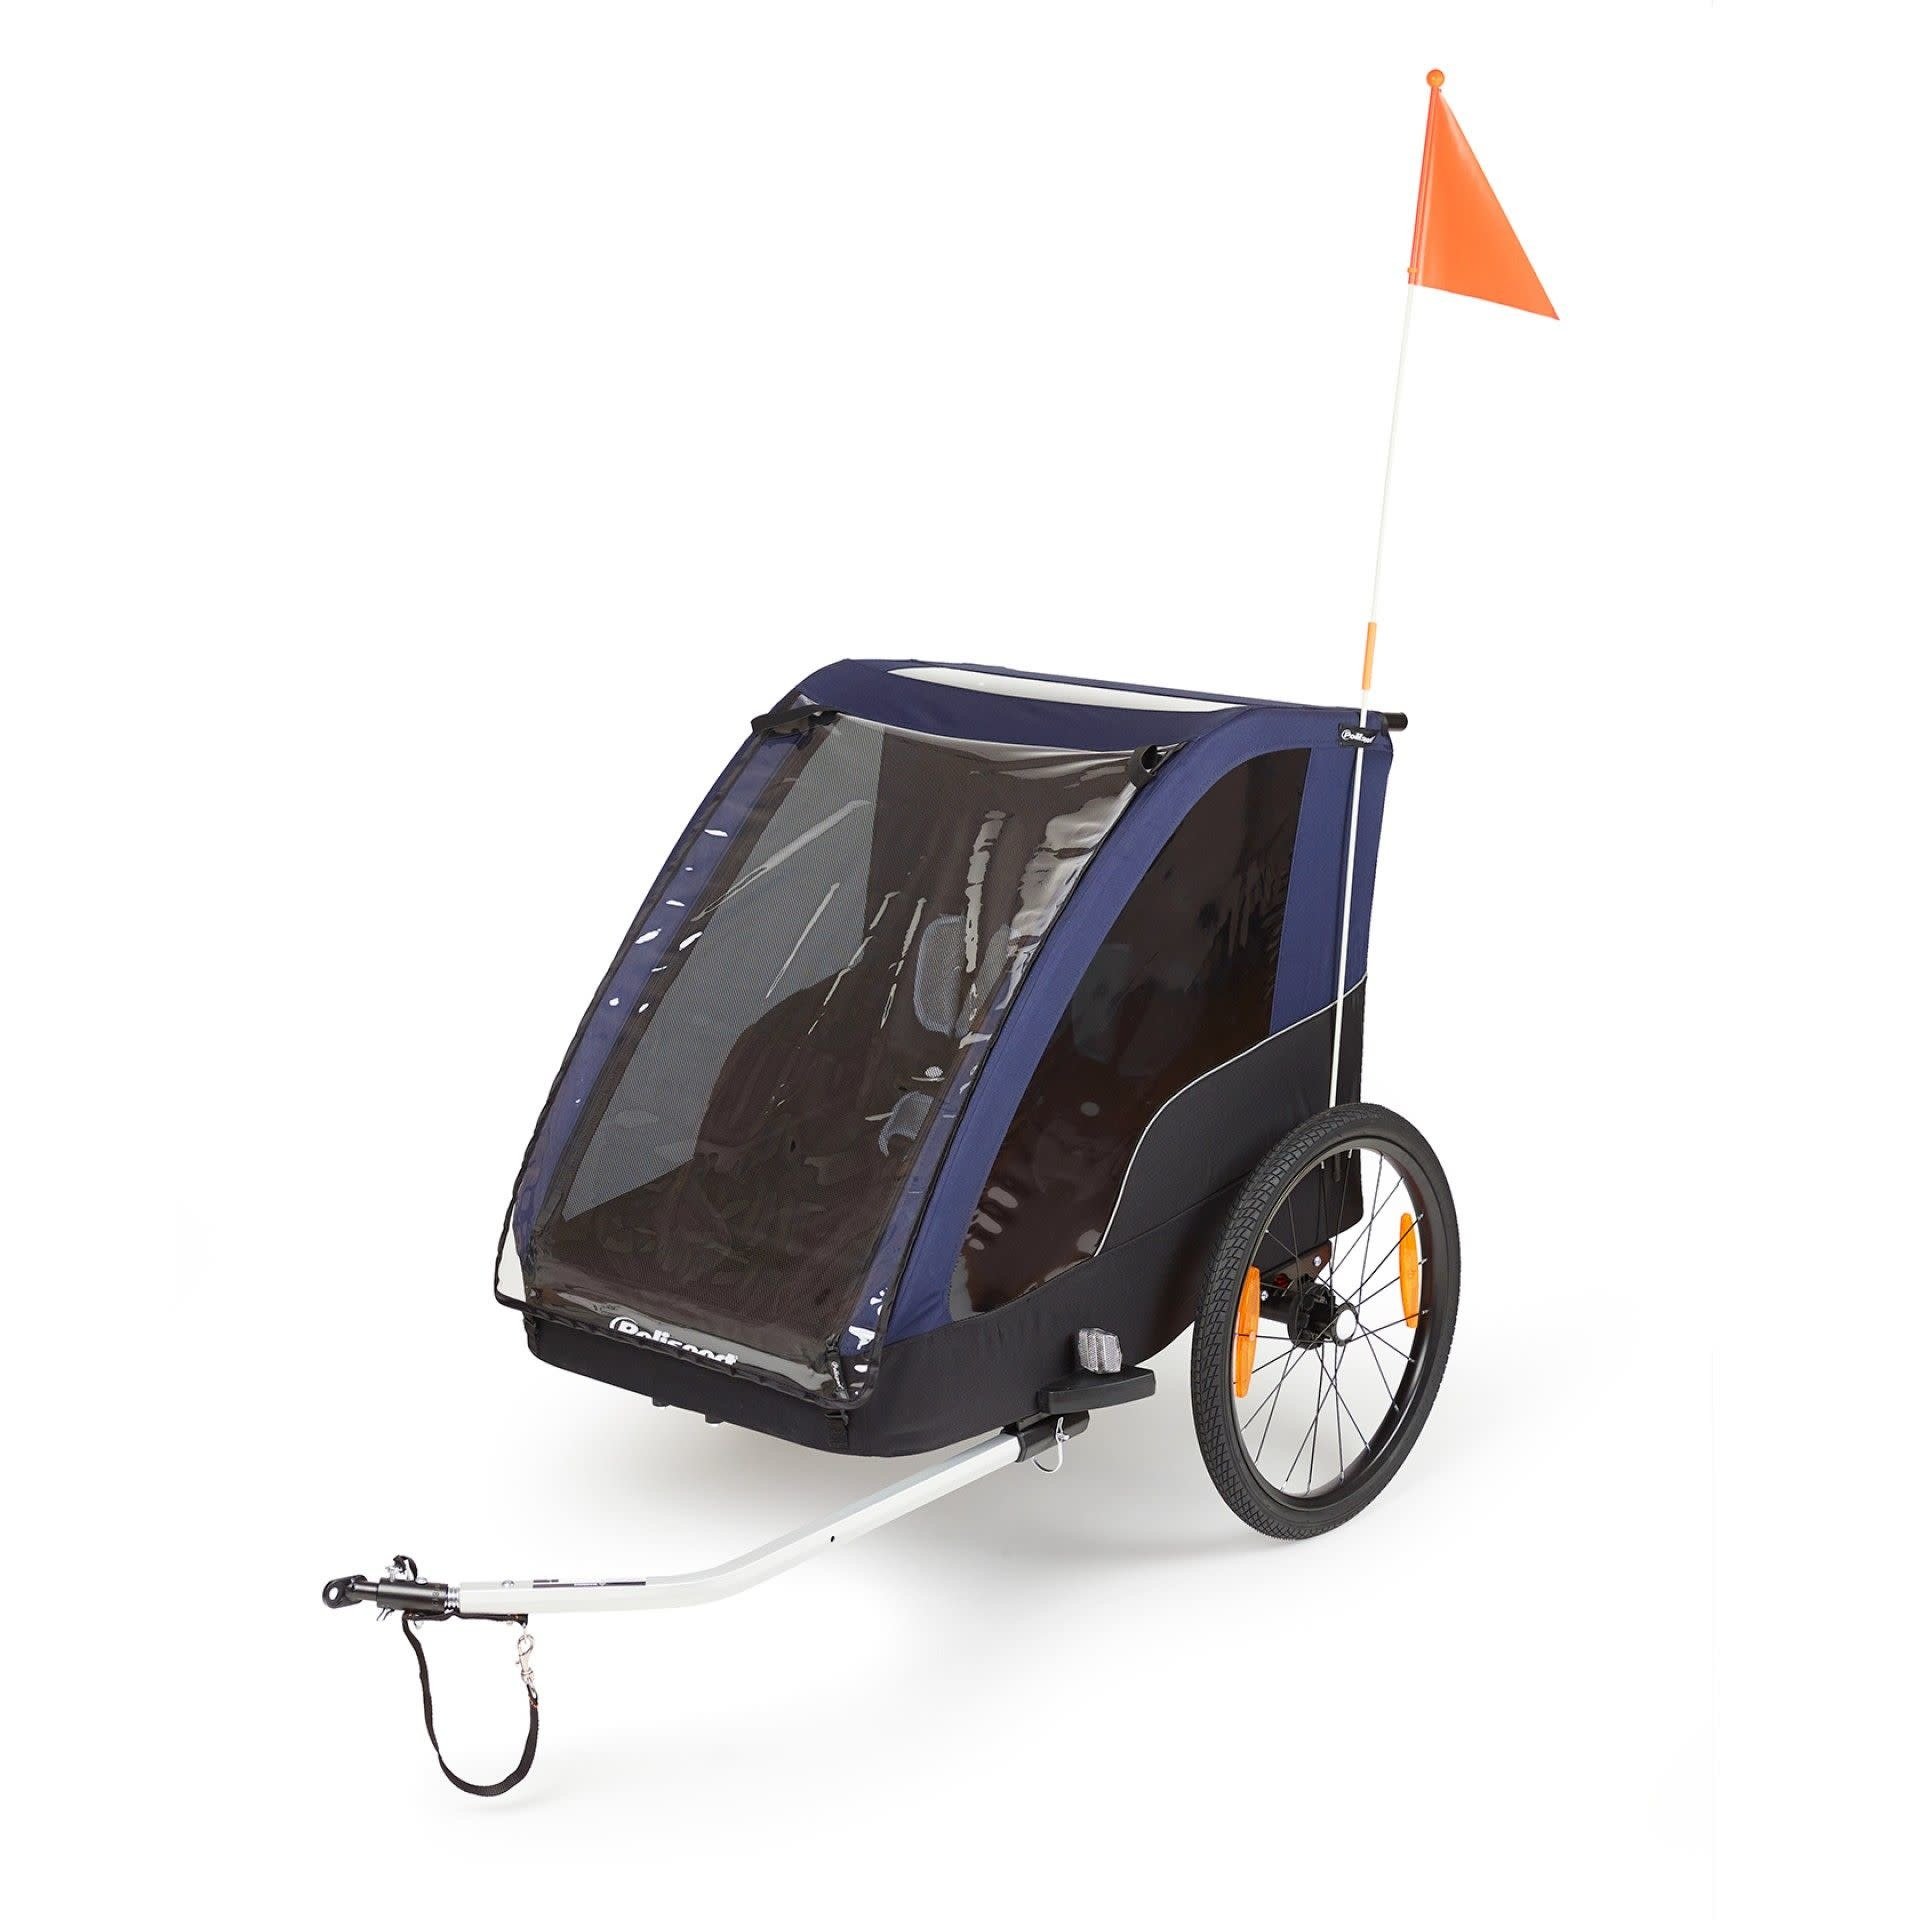 You added <b><u>POLISPORT KIDS TRAILER (1 or 2 Kids), Stroller Kit Included</u></b> to your cart.